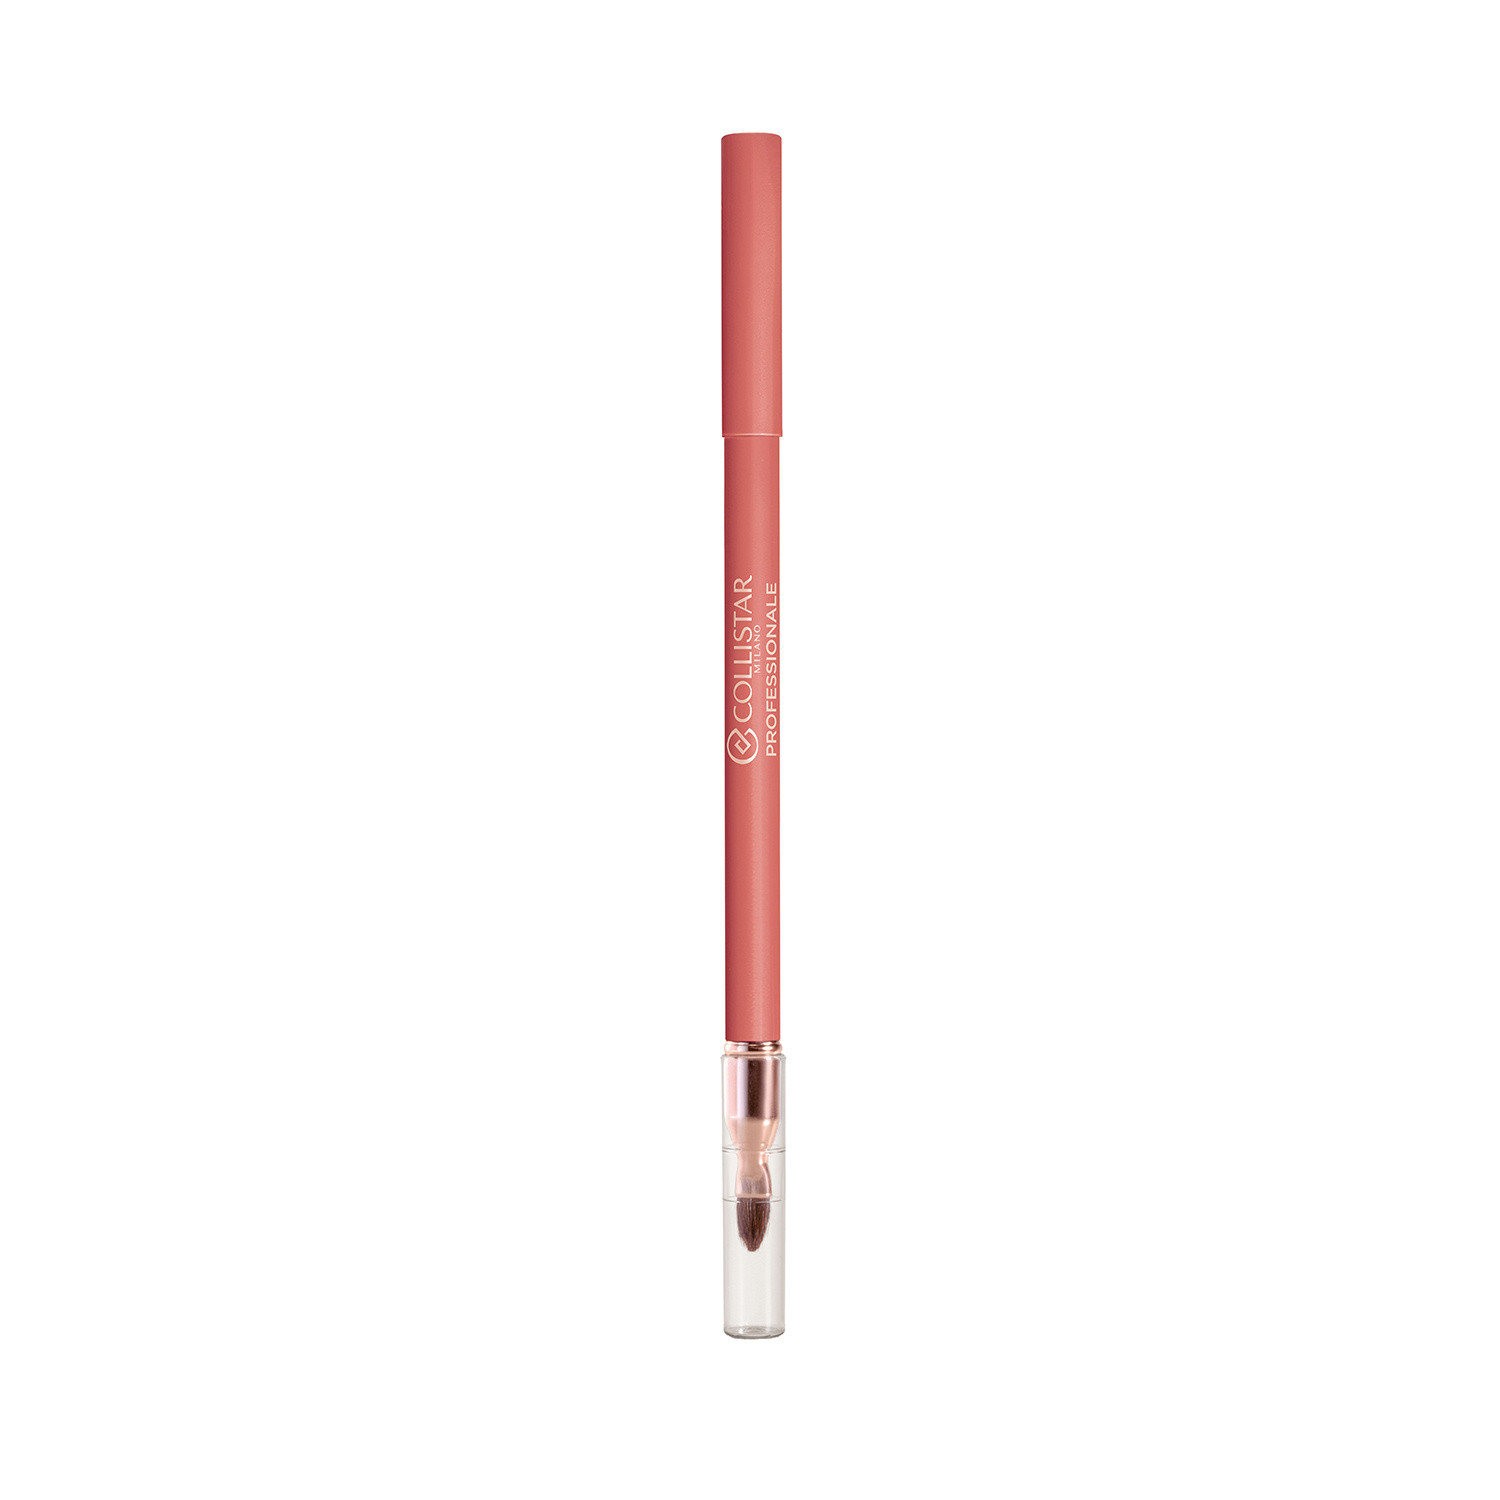 Collistar - Professional long-lasting lip pencil - 102 Antique Pink, Antique Pink, large image number 0